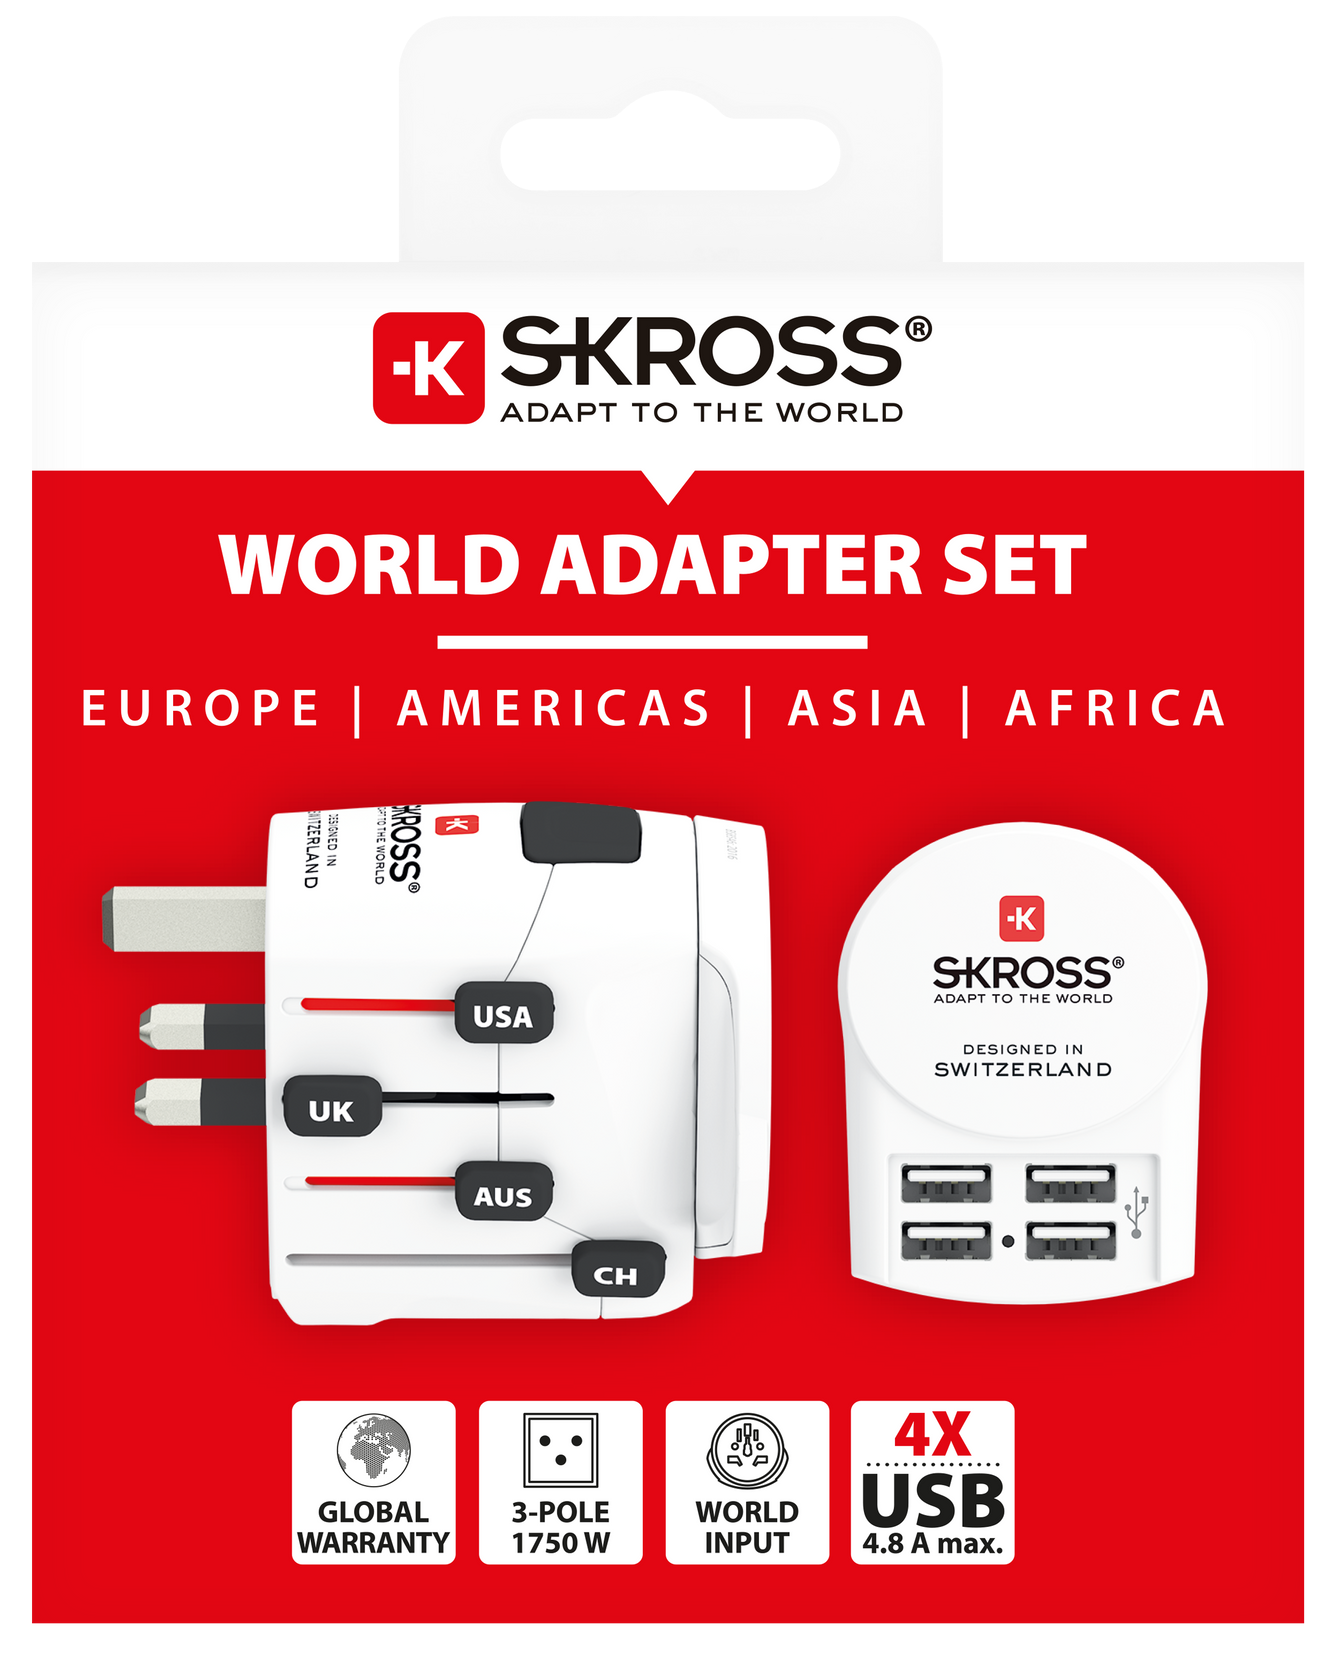 Skross 3-Pole PRO + USB 4xA Travel Adapter Packaging